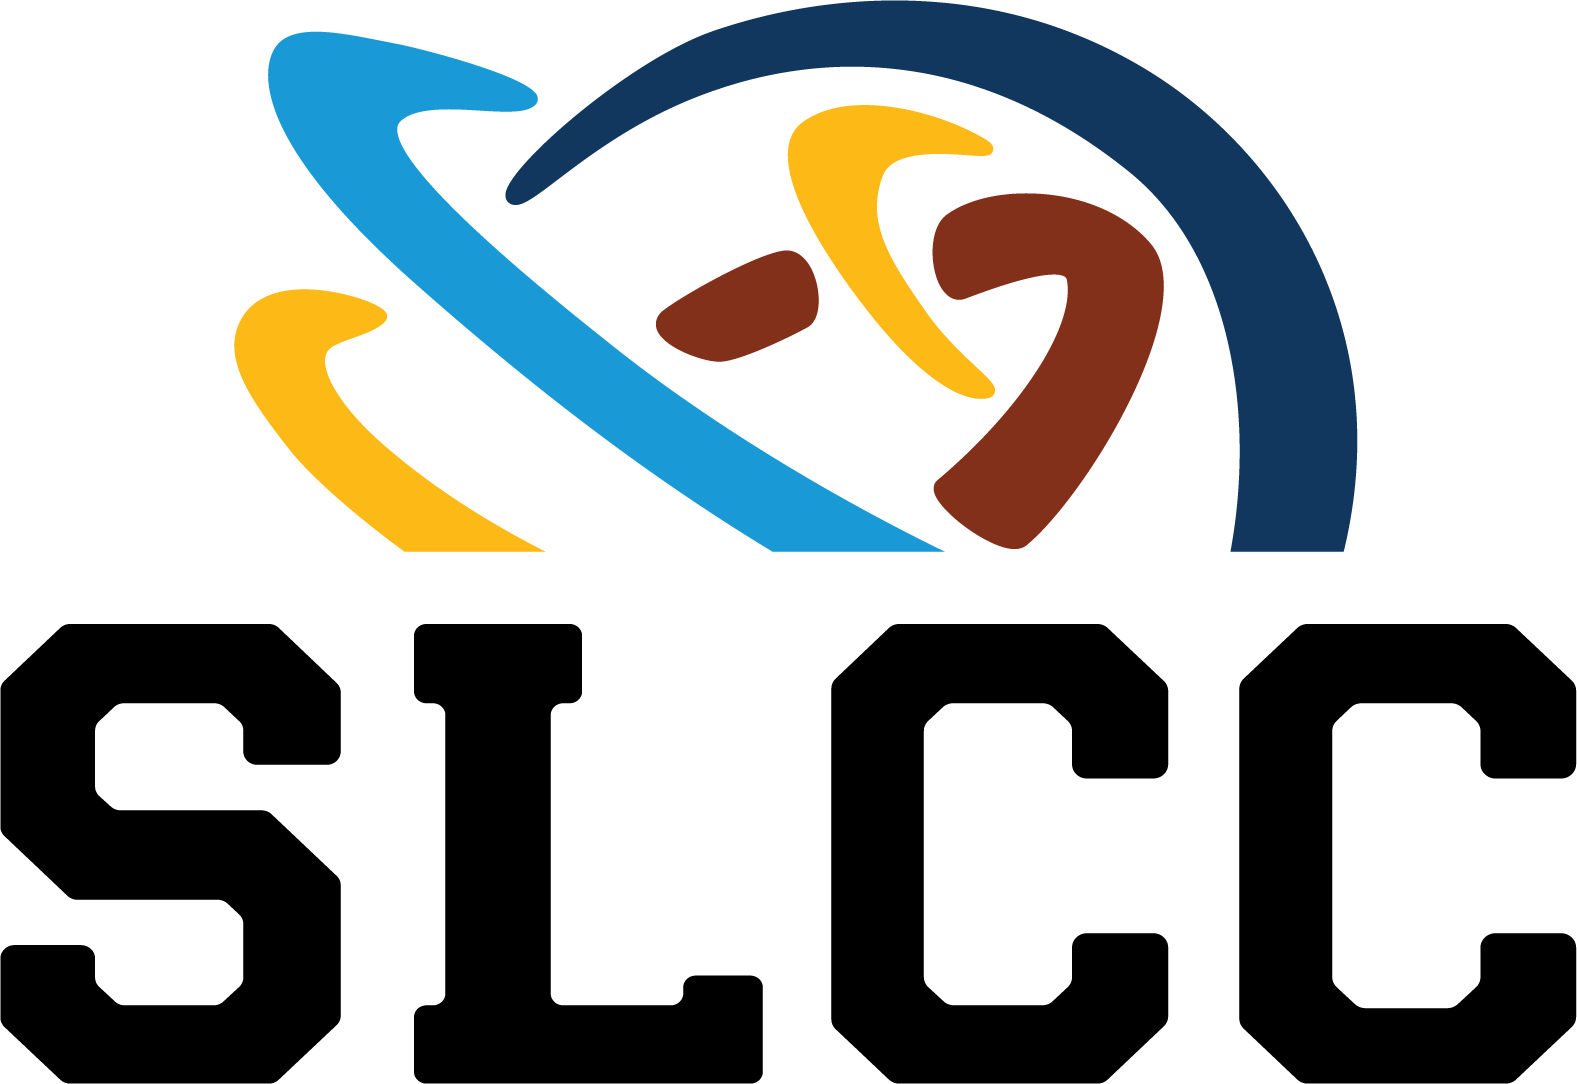 Slcc Logo - Salt Lake Community College (1577x1084)